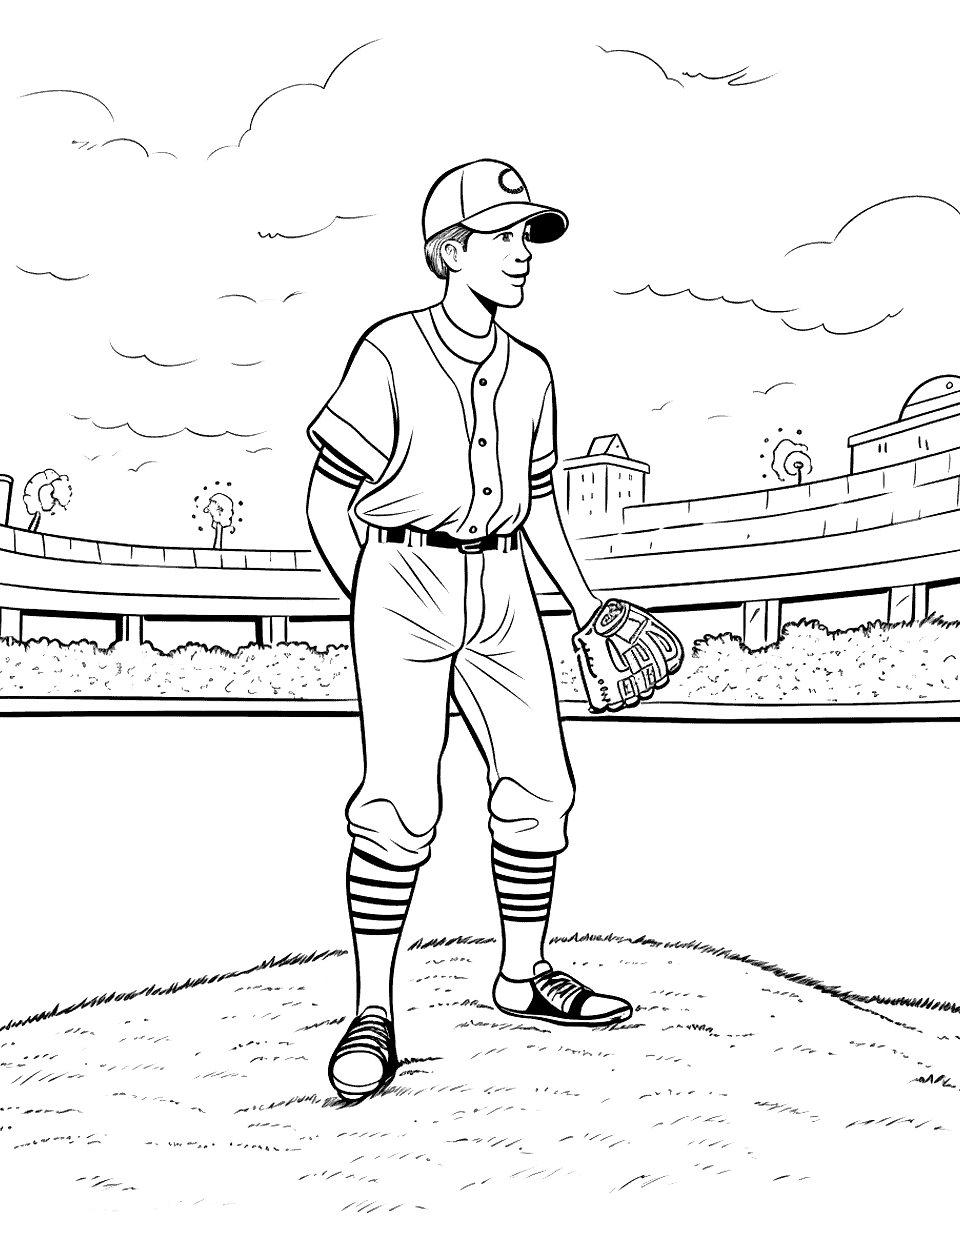 Historic Baseball Moment Coloring Page - A reimagining of a historic baseball moment, with simplified character and setting.